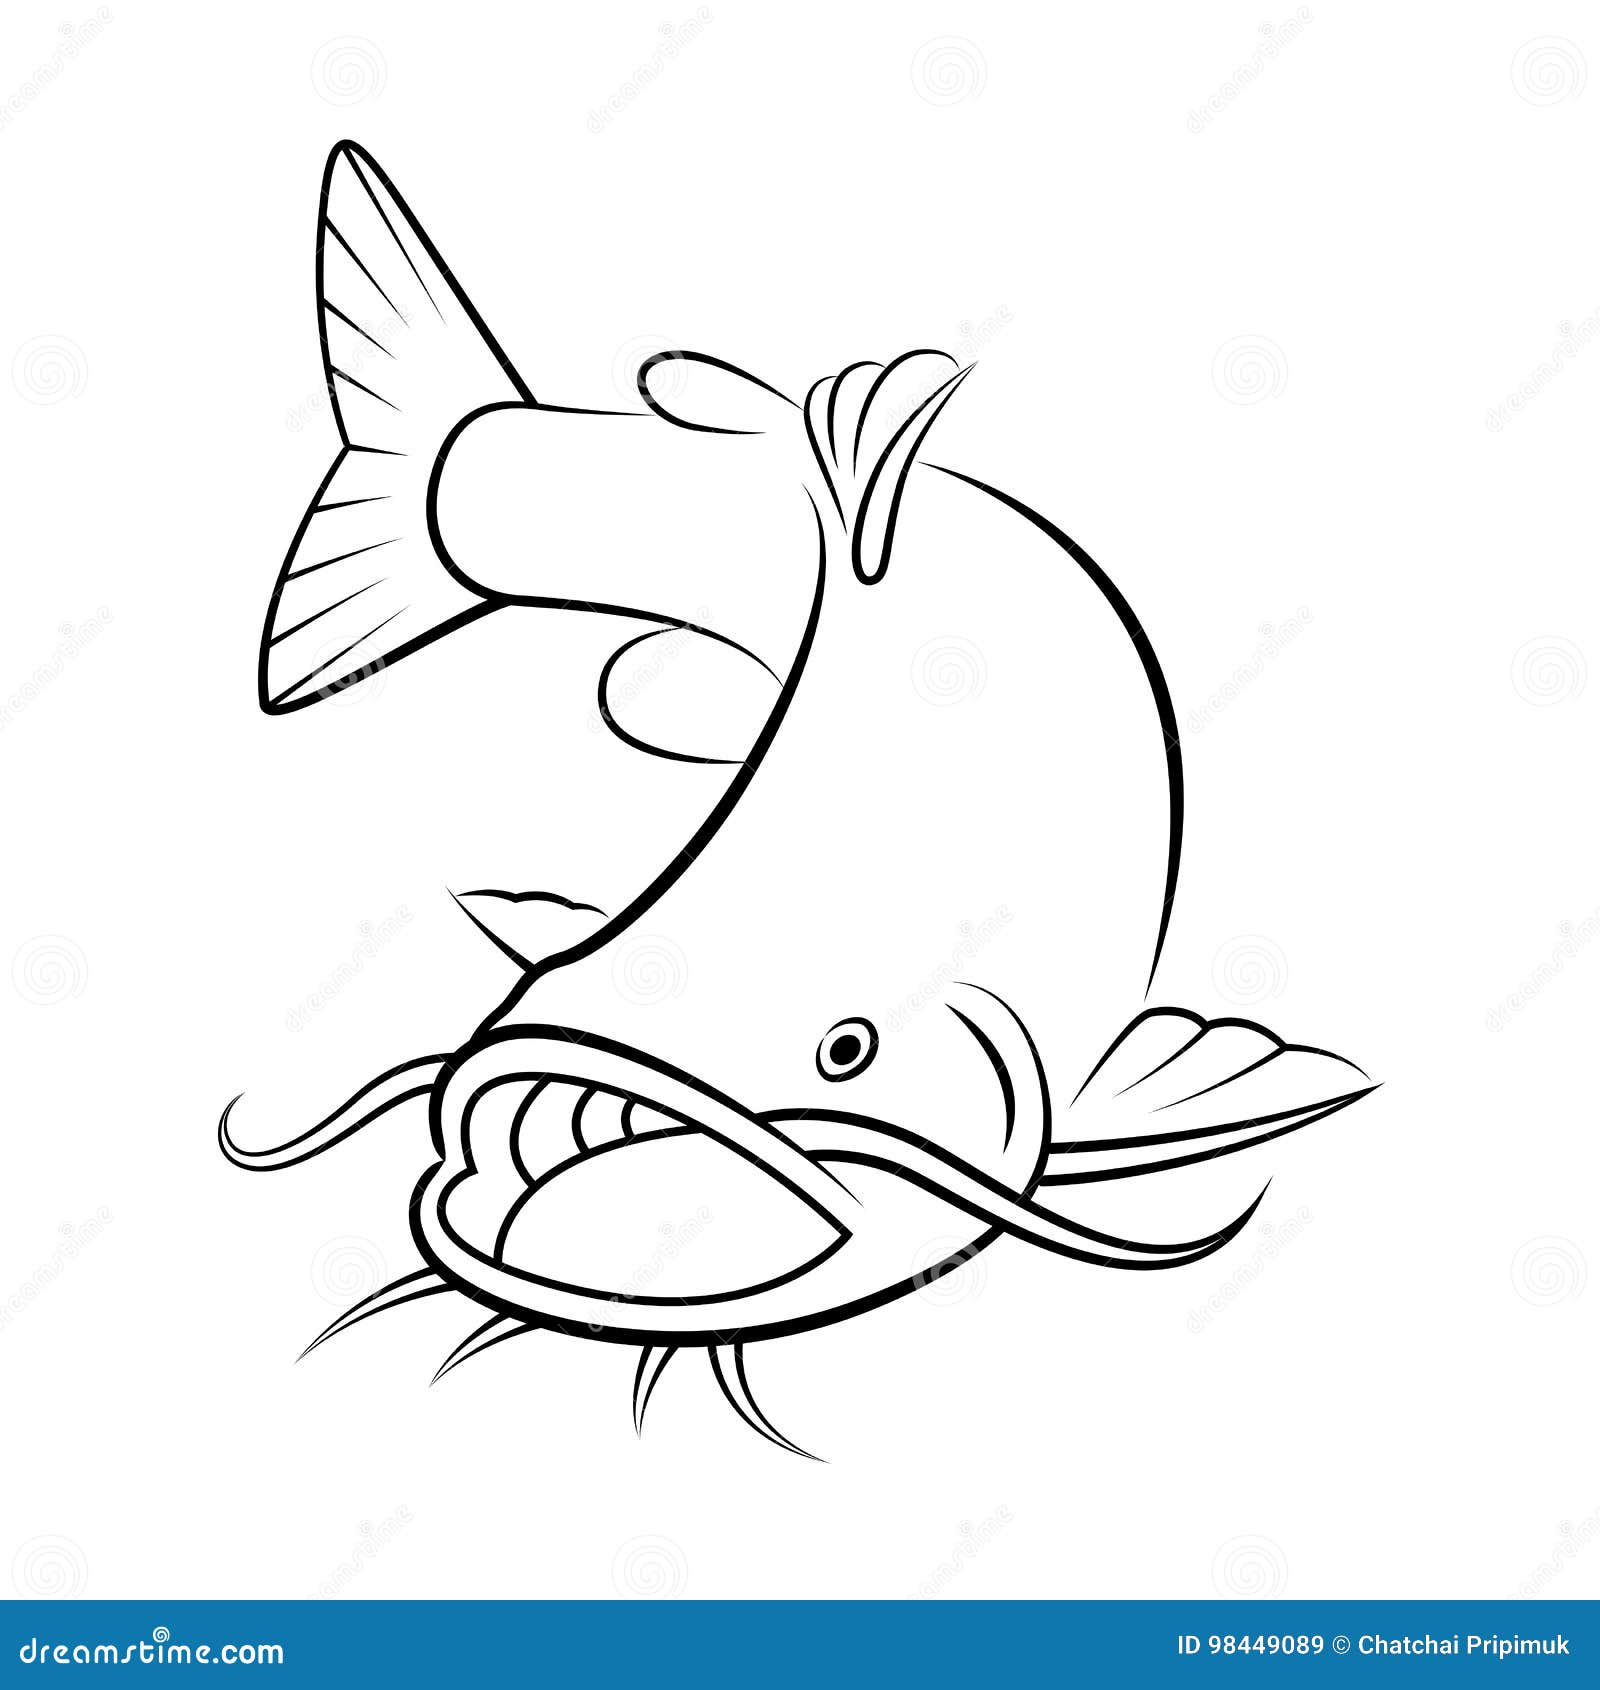 Catfish Cartoon Vector | CartoonDealer.com #280245